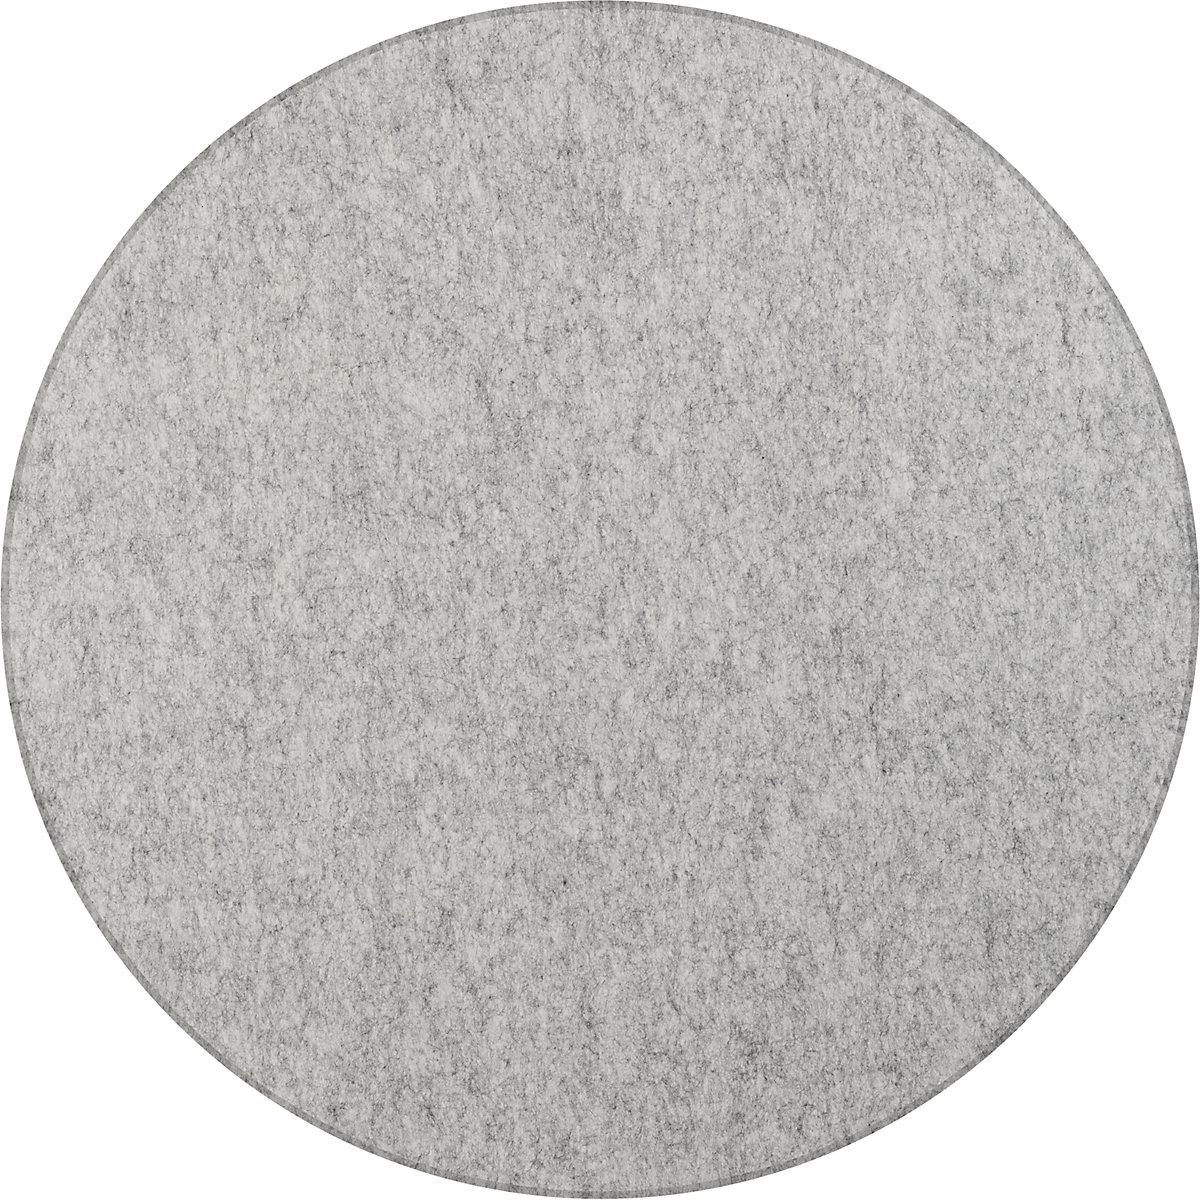 Acoustic ceiling panel, PET felt – eurokraft basic, Ø 1200 mm, round shape, light grey, 10+ items